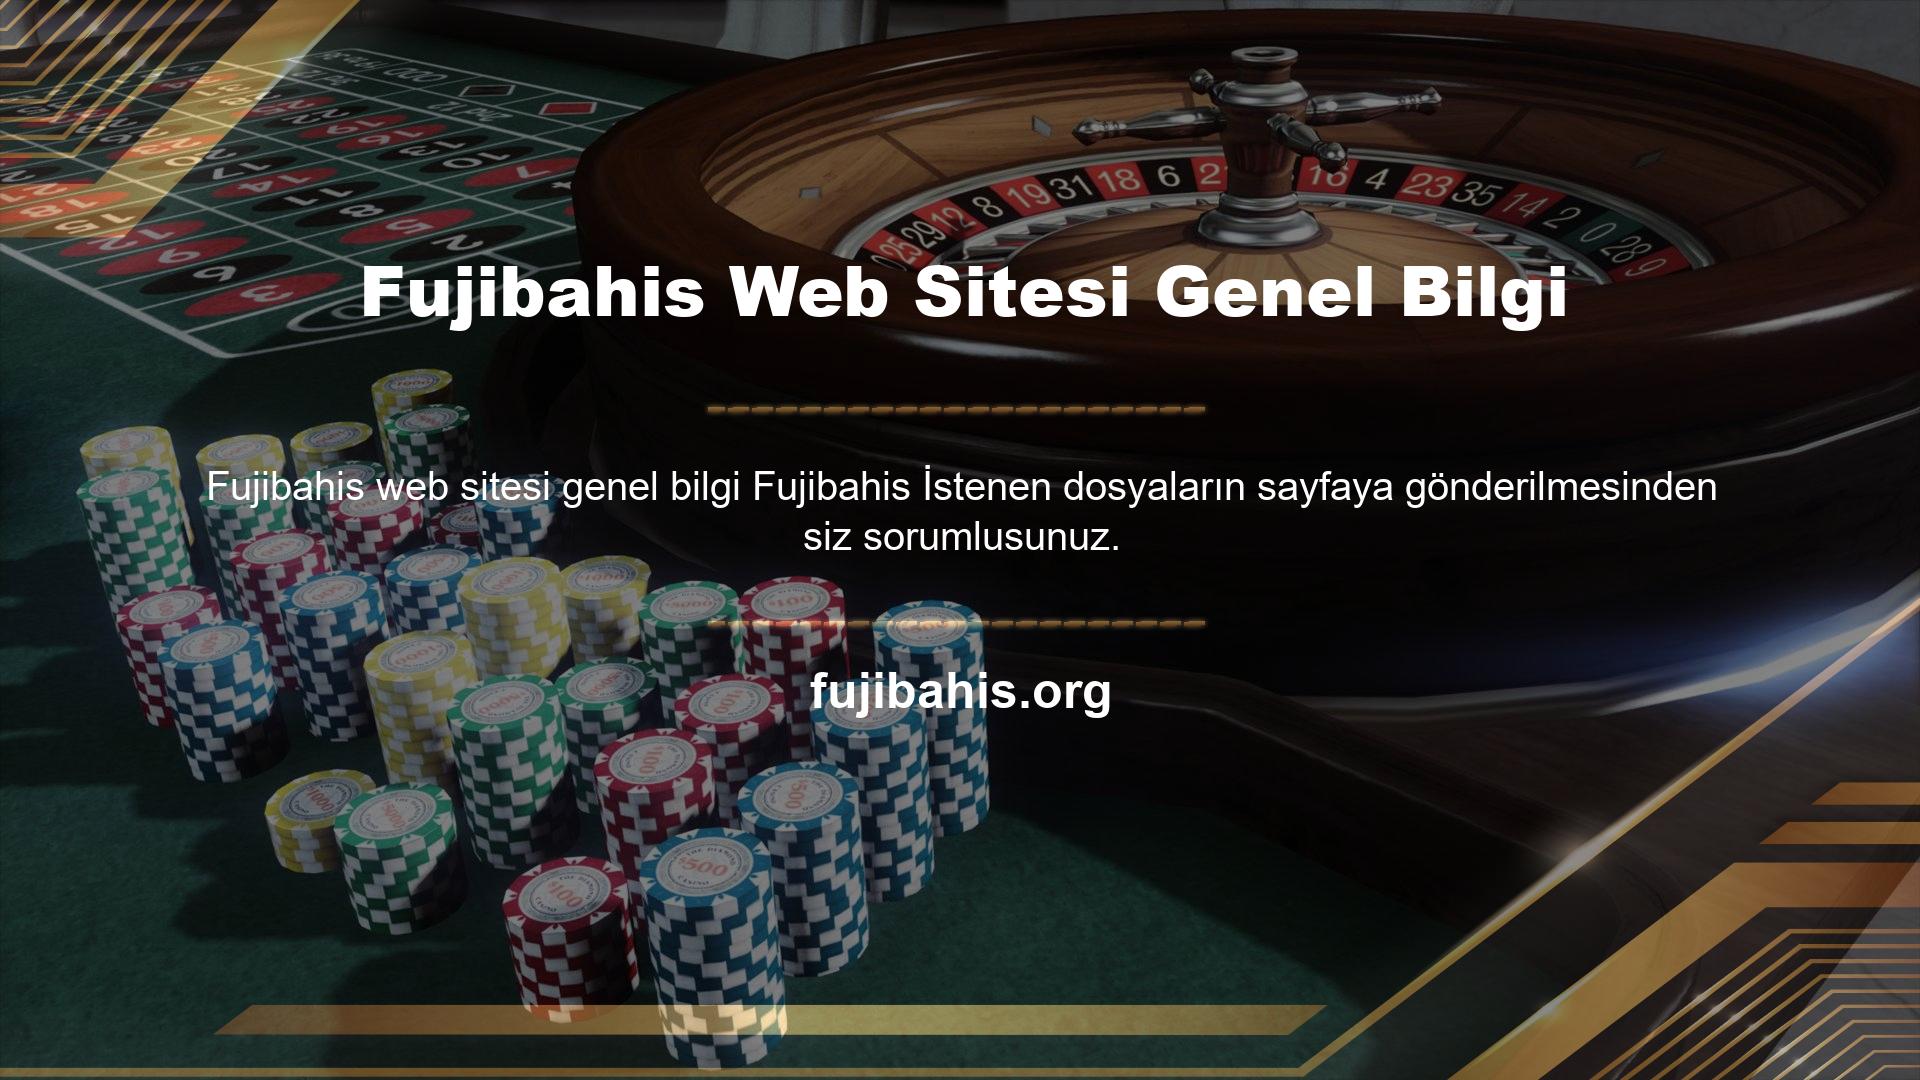 Fujibahis Web Sitesi Genel Bilgi